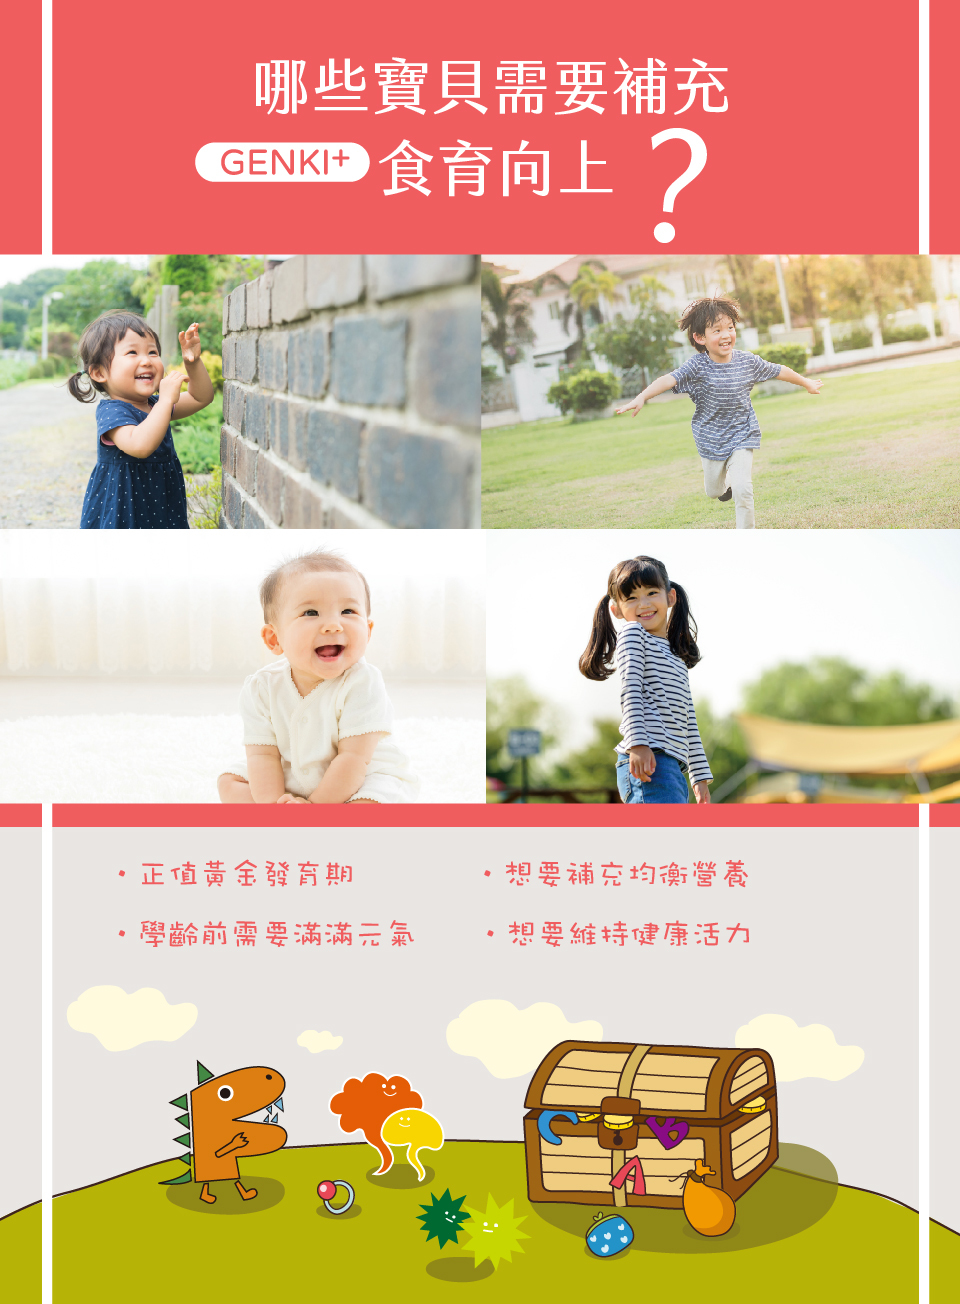 bevyc,日本AFC,保健食品,GENKI+ 伸長革命,兒童營養食品,日本原裝,幫助促進食慾,偏食,黃金發育期,體重過輕